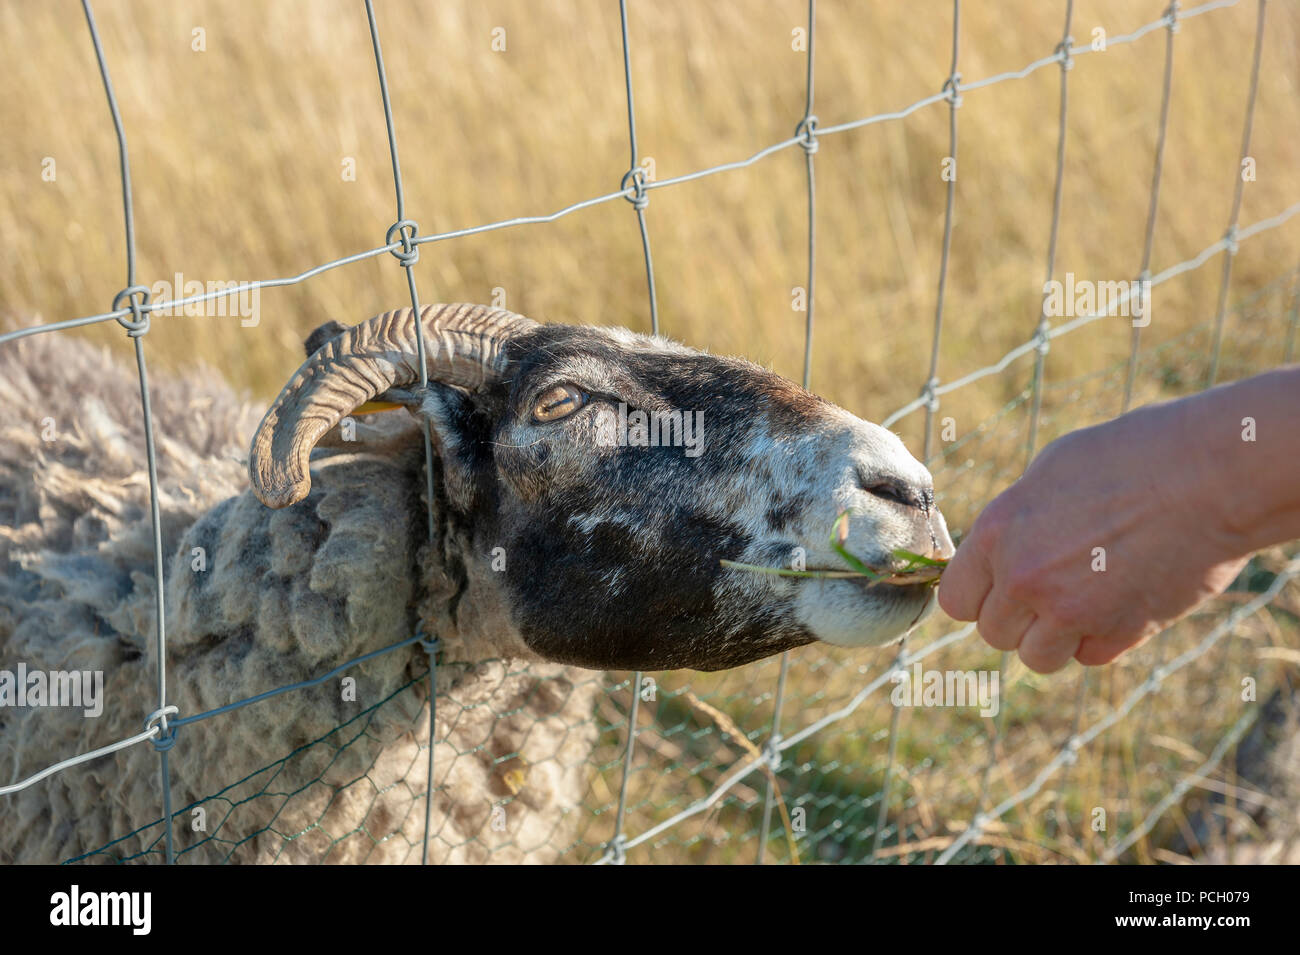 Sheep at wire-netting fence is being fed, Cape Arkona, Putgarten, Rügen, Mecklenburg-Vorpommern, Germany, Europe Stock Photo